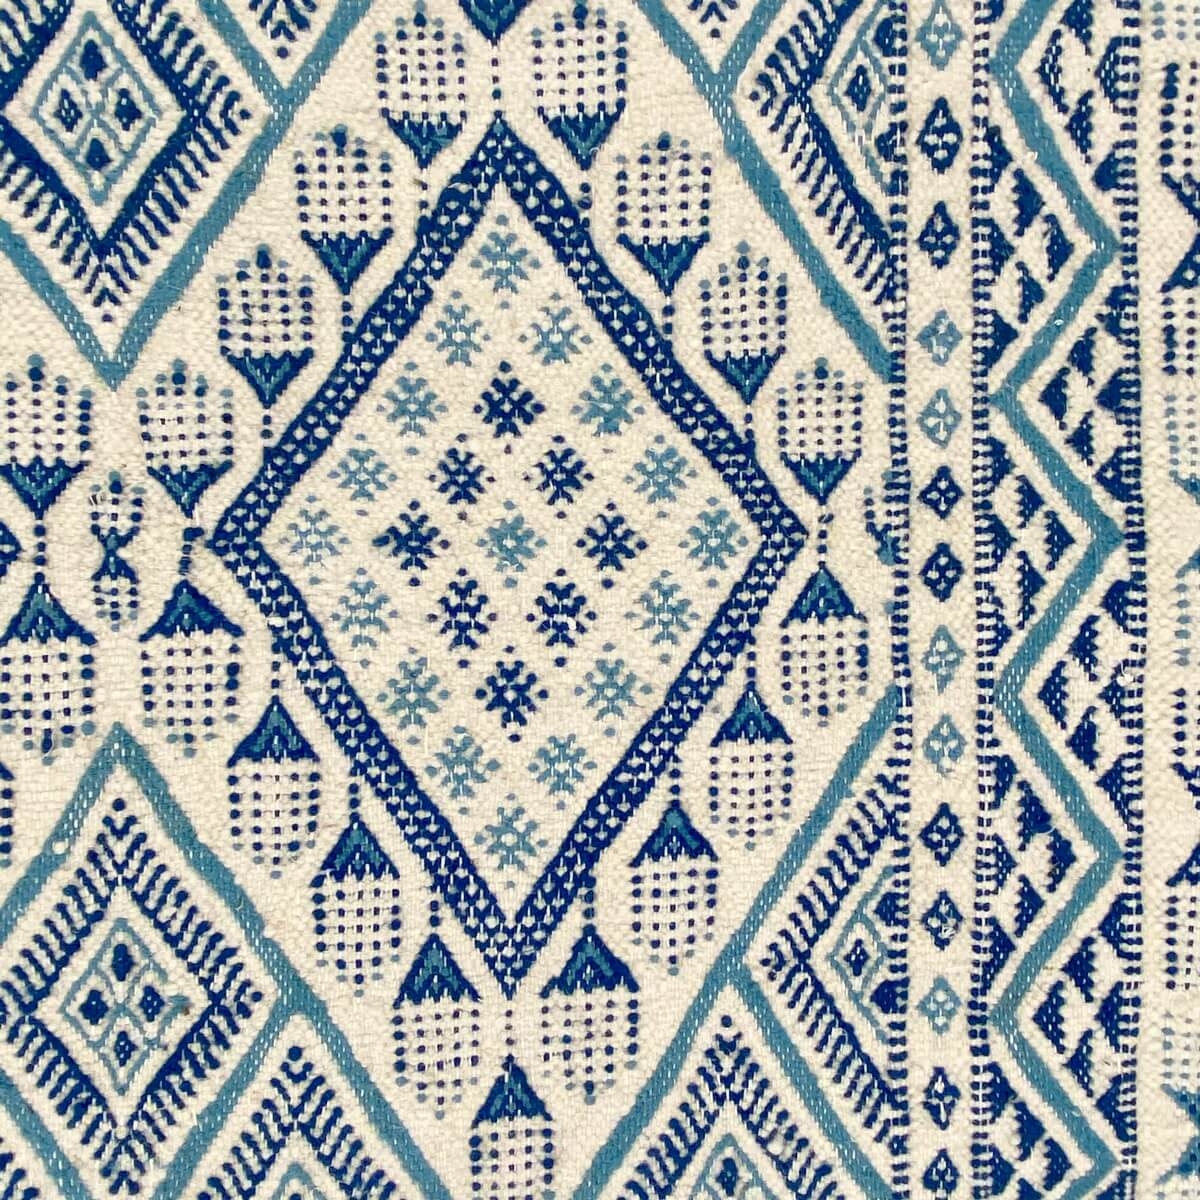 Berber carpet Rug Margoum Ghassa 125x195 Blue/White (Handmade, Wool, Tunisia) Tunisian margoum rug from the city of Kairouan. Re